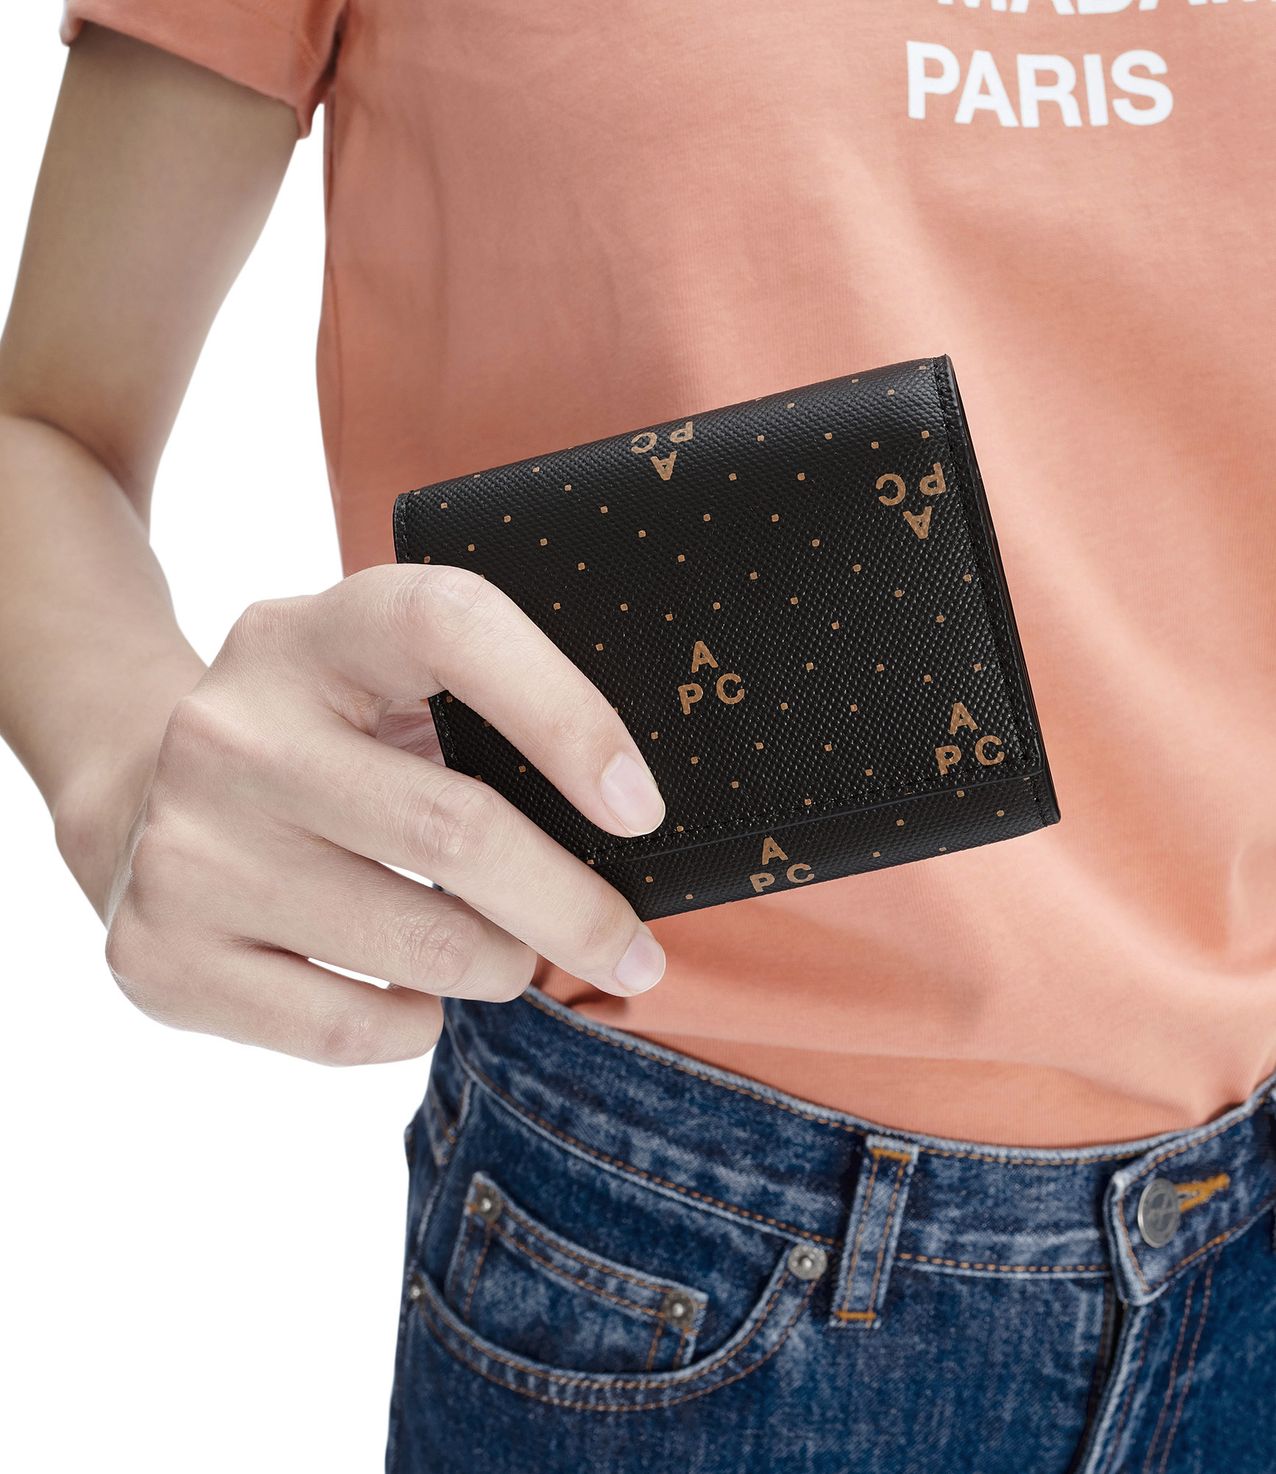 Lois Small compact wallet BLACK APC